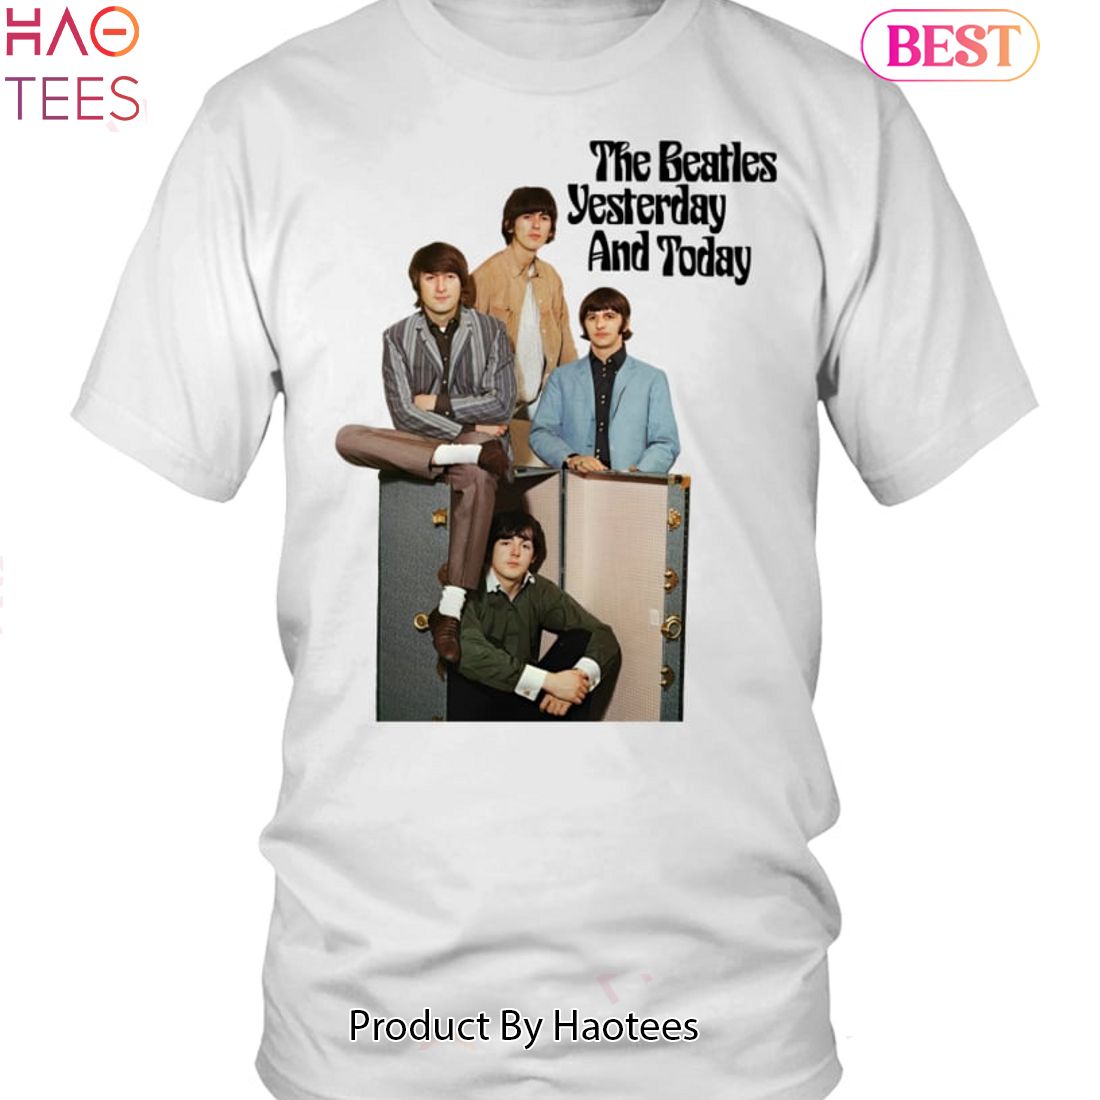 TRENDING The Beatles Story Rock band Unisex T-Shirt